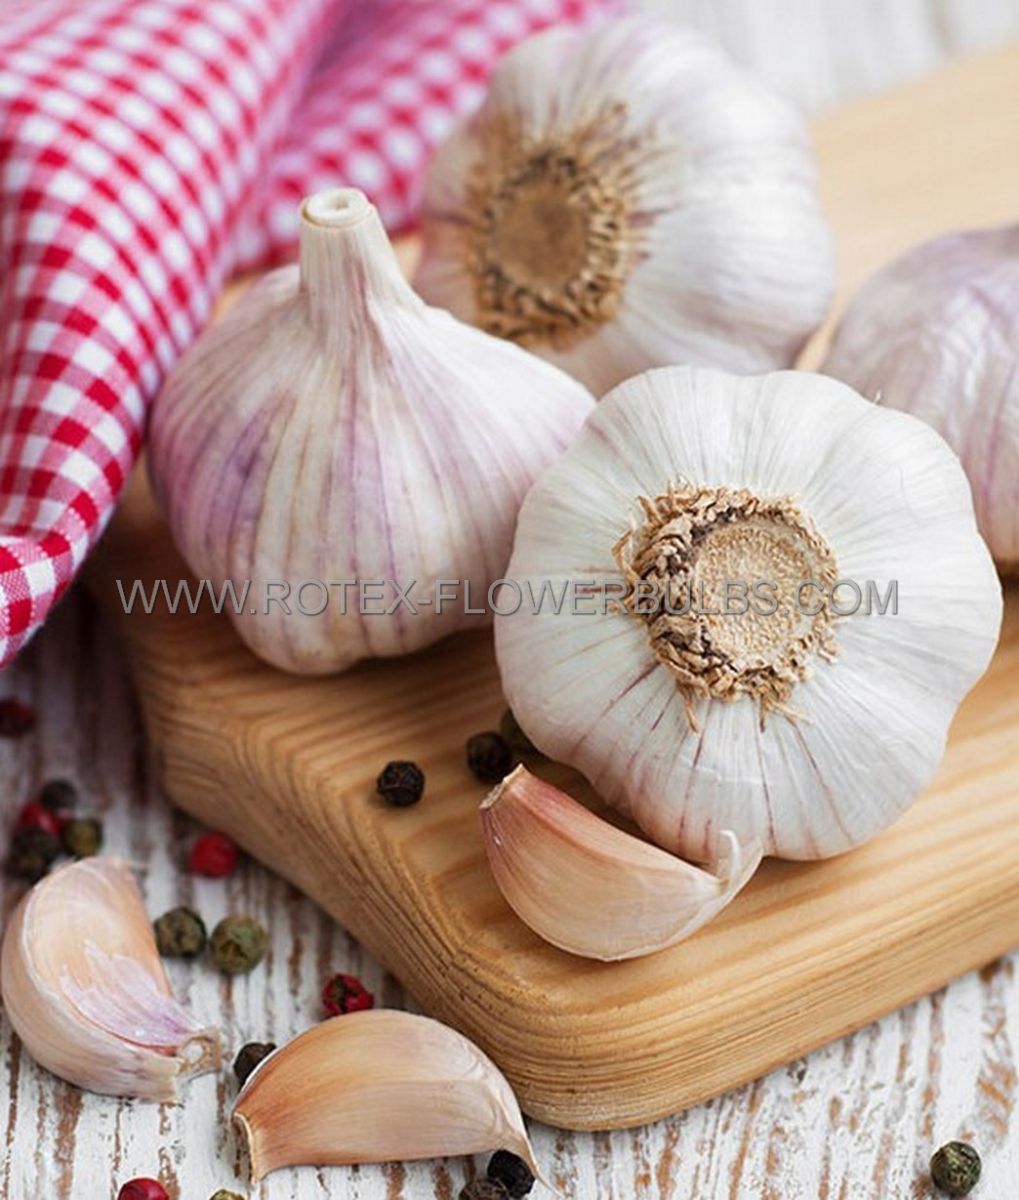 garlic bulbs no1 eg100 50 cloves